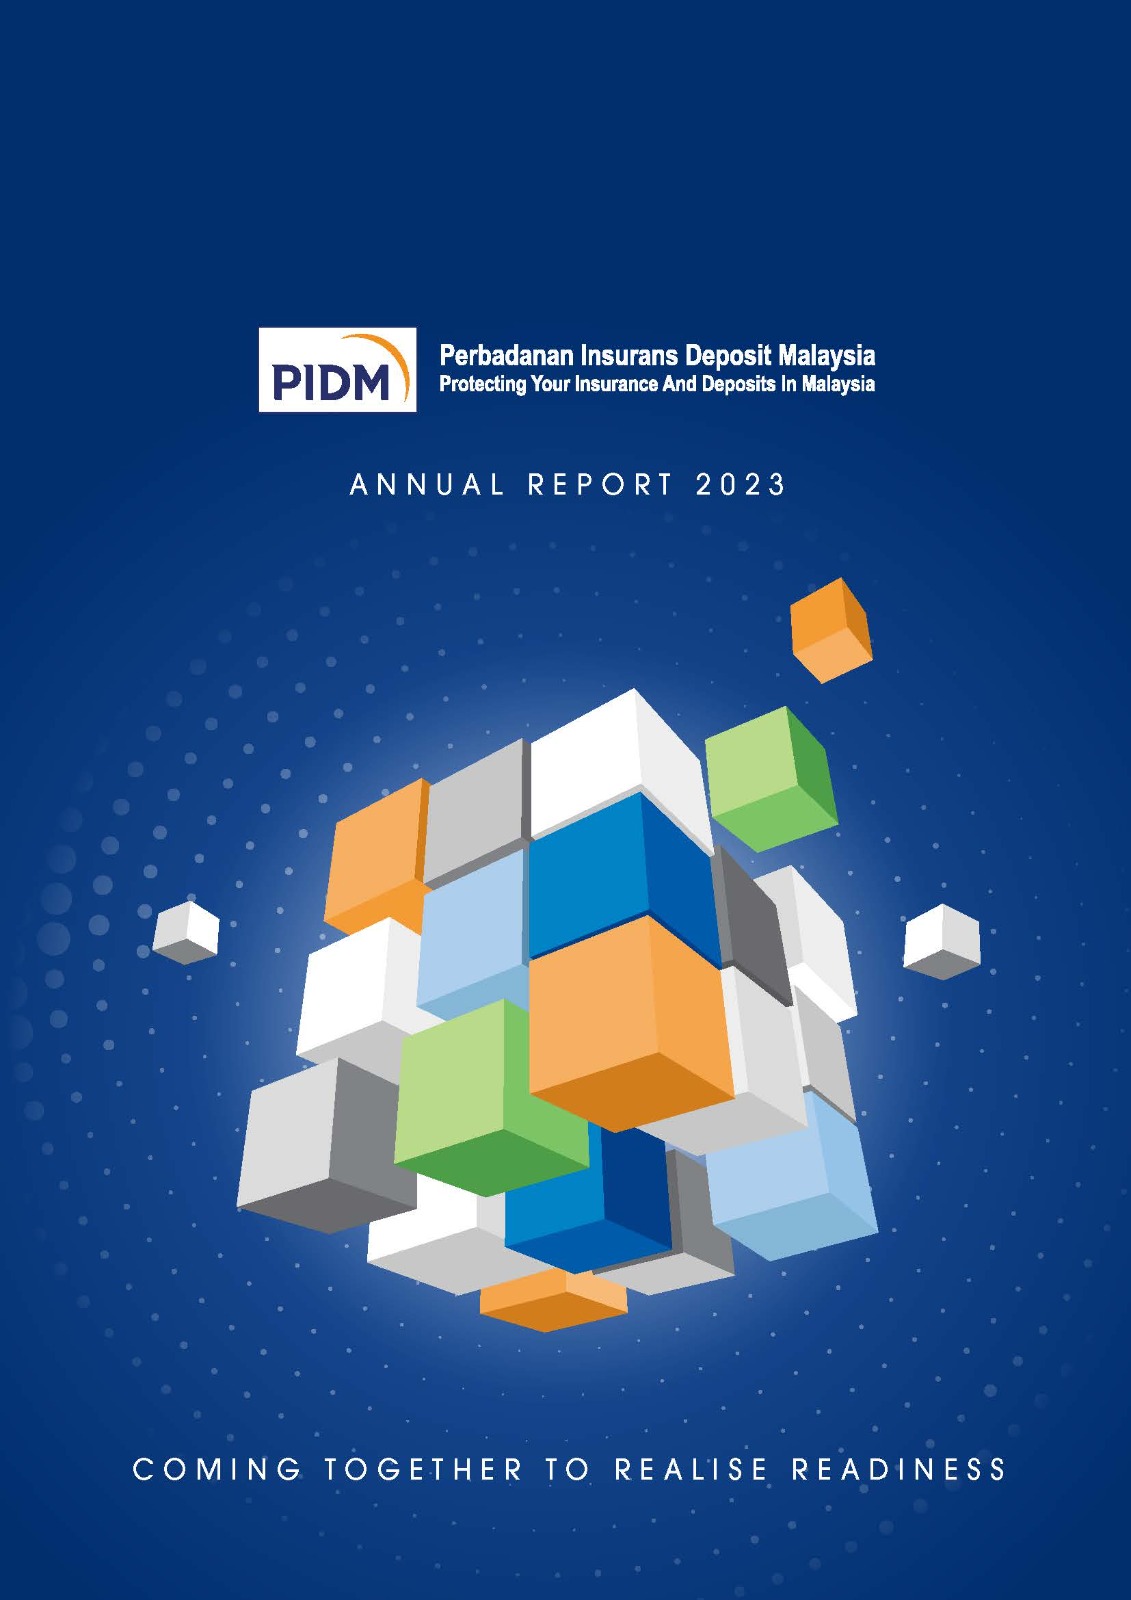 PIDM Annual Report 2023